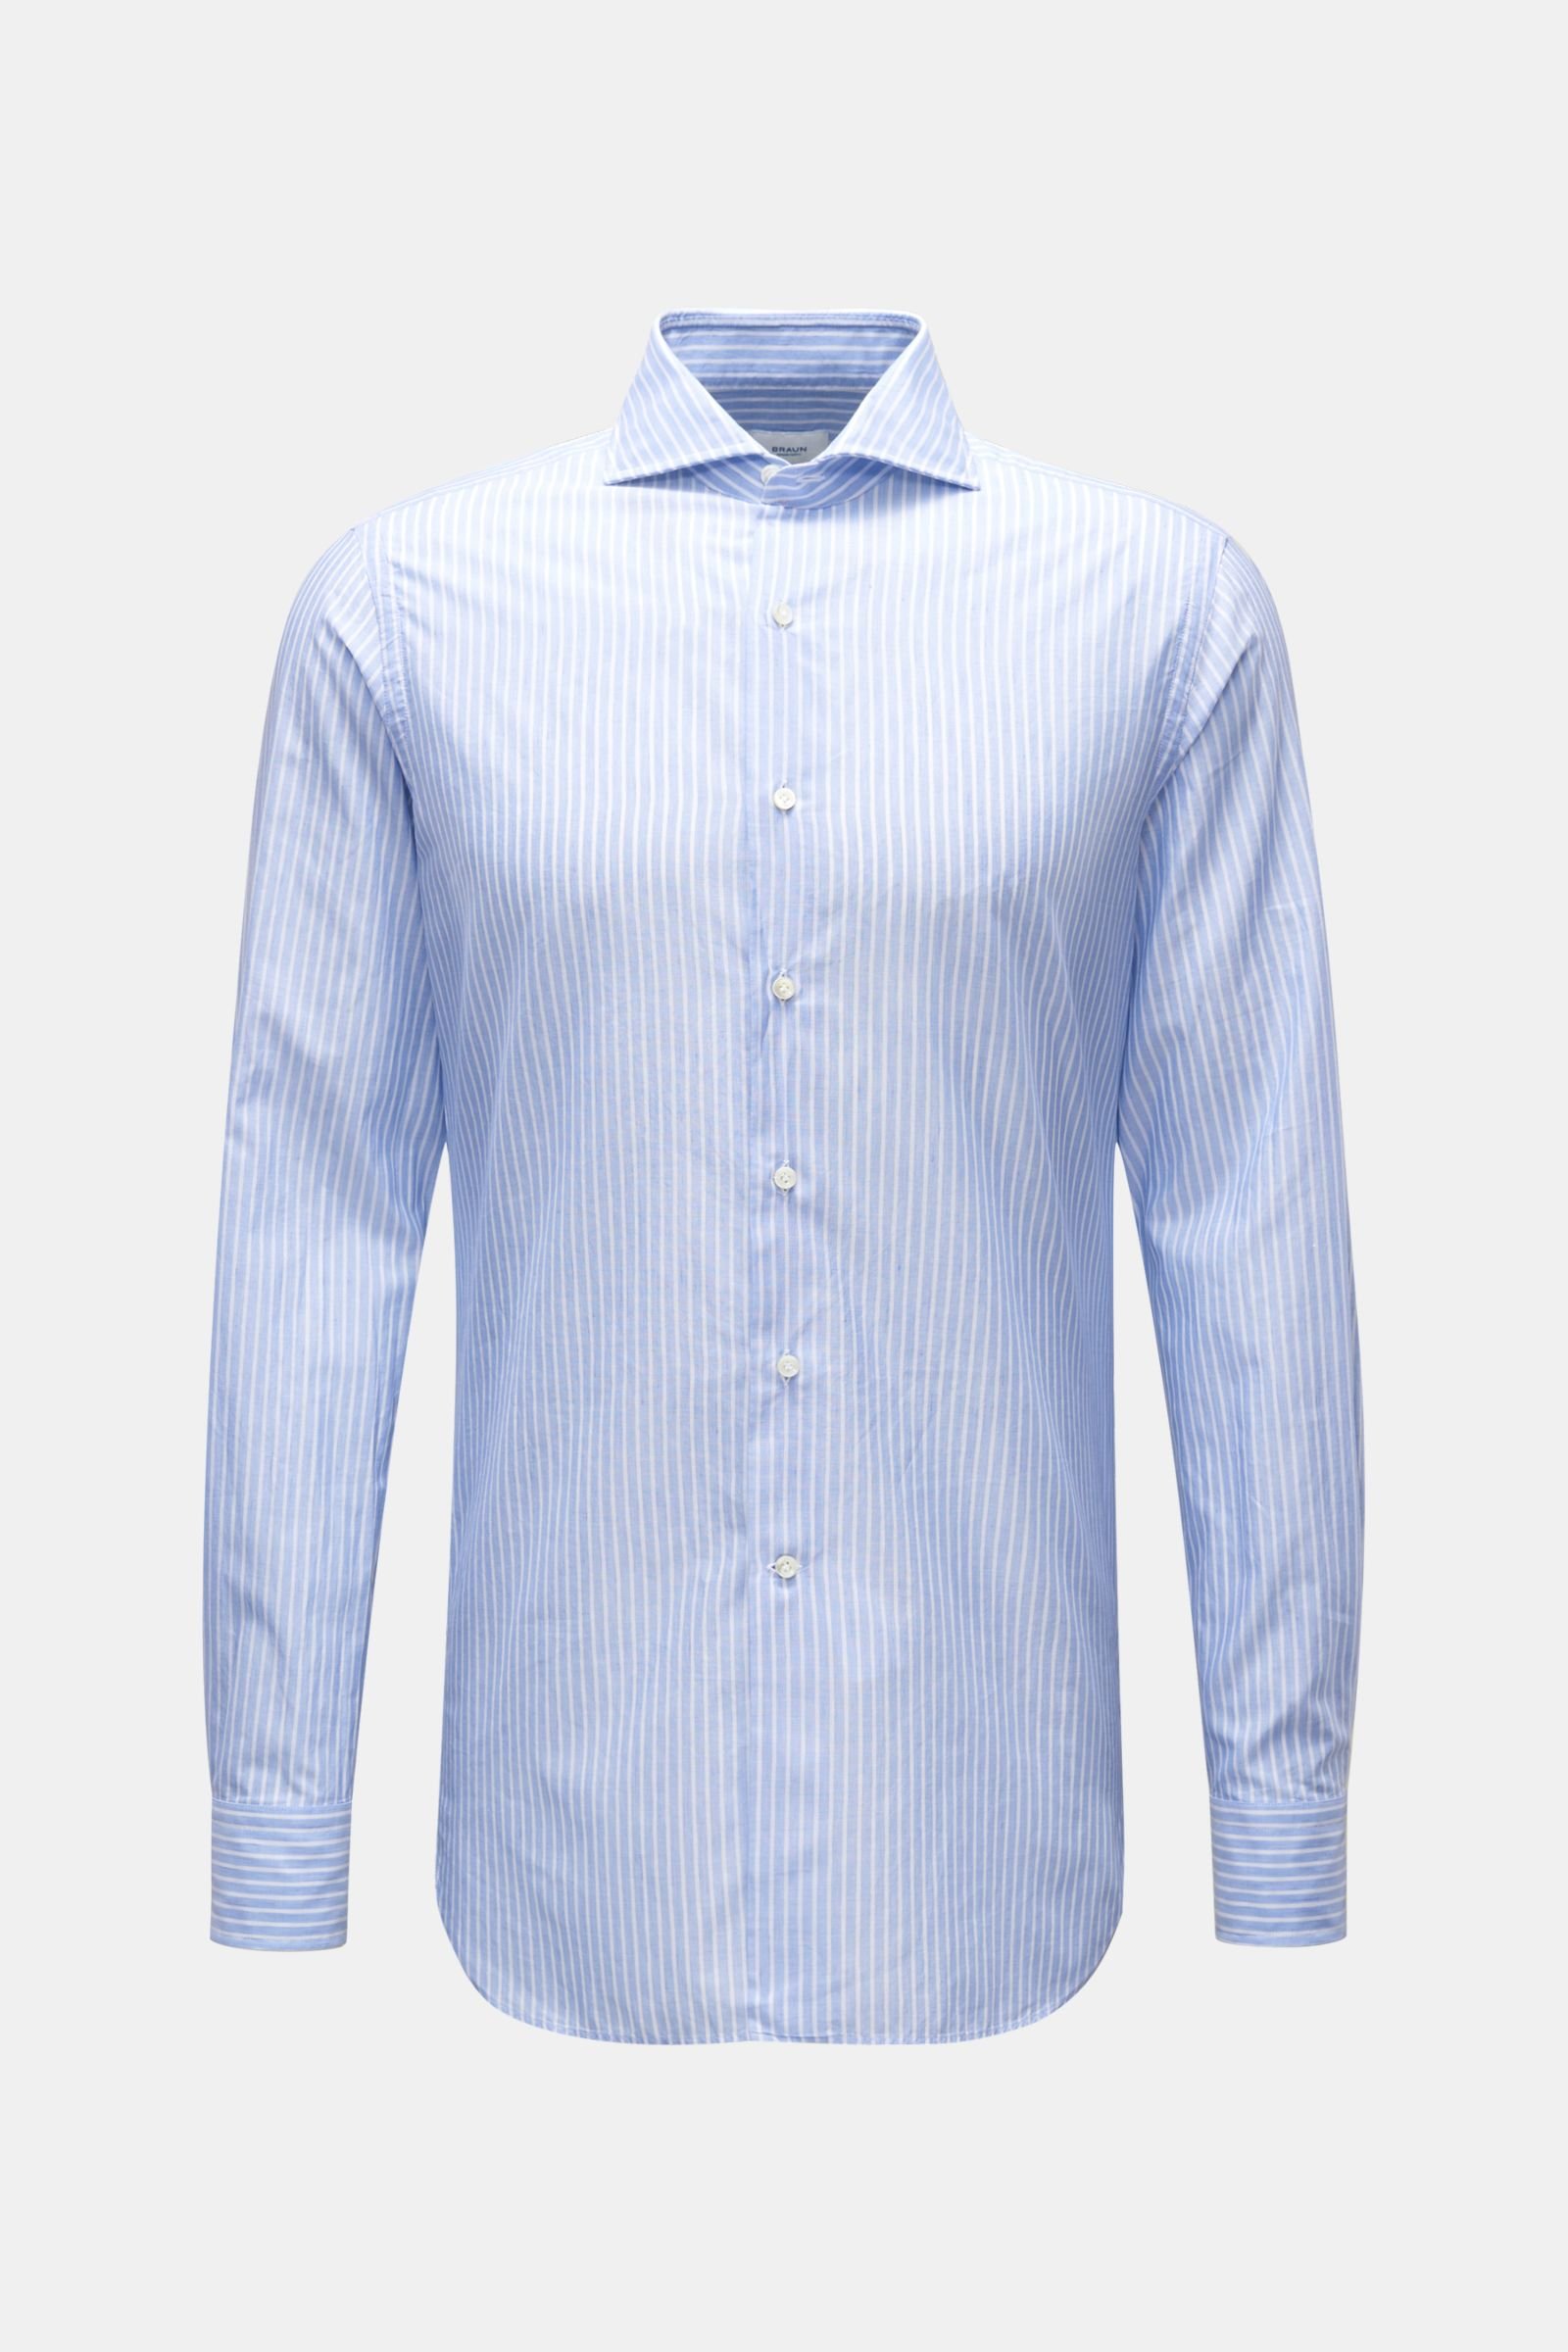 Casual shirt shark collar light blue/white striped 